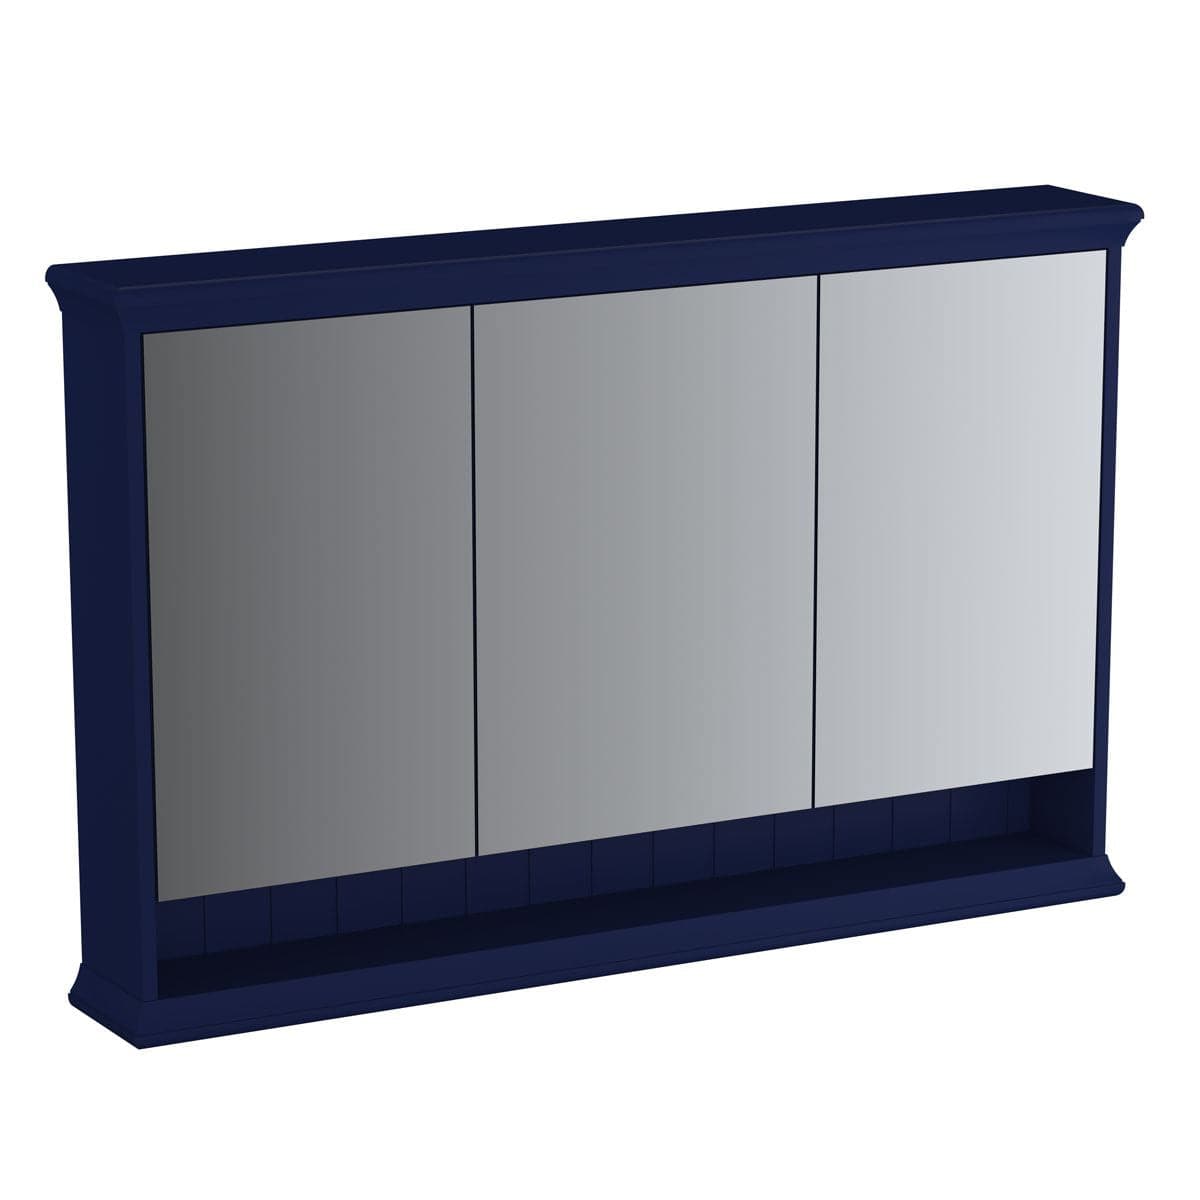 VitrA Valarte LED-Spiegelschrank 118 cm 3 Türen Stahlblau (Lack)